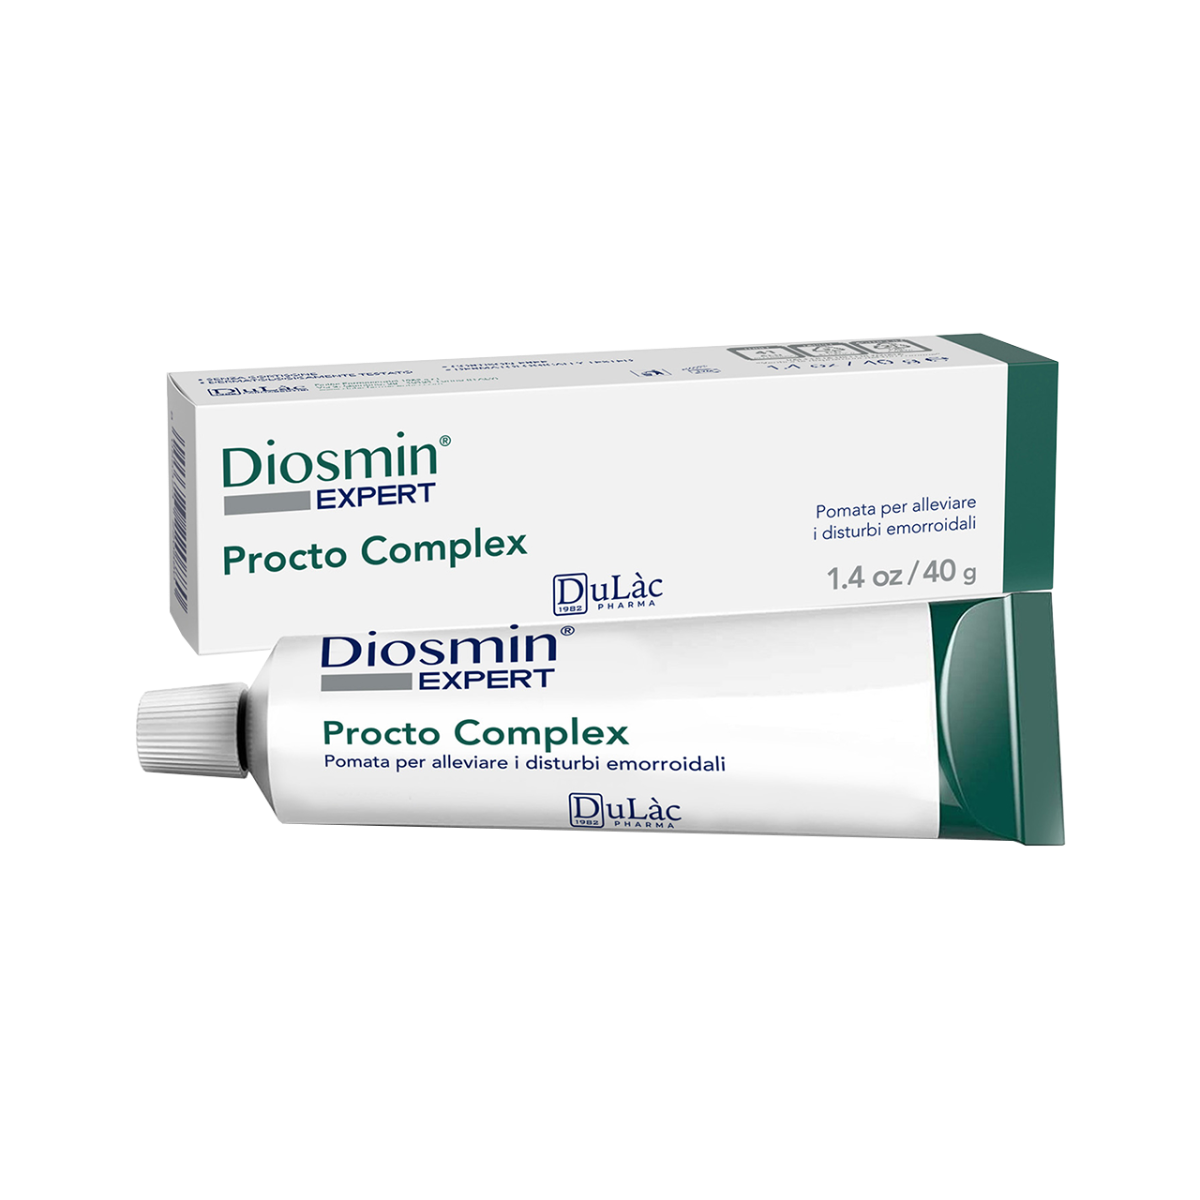 Hemorrhoid Cream 0% Cortisone - Procto Complex